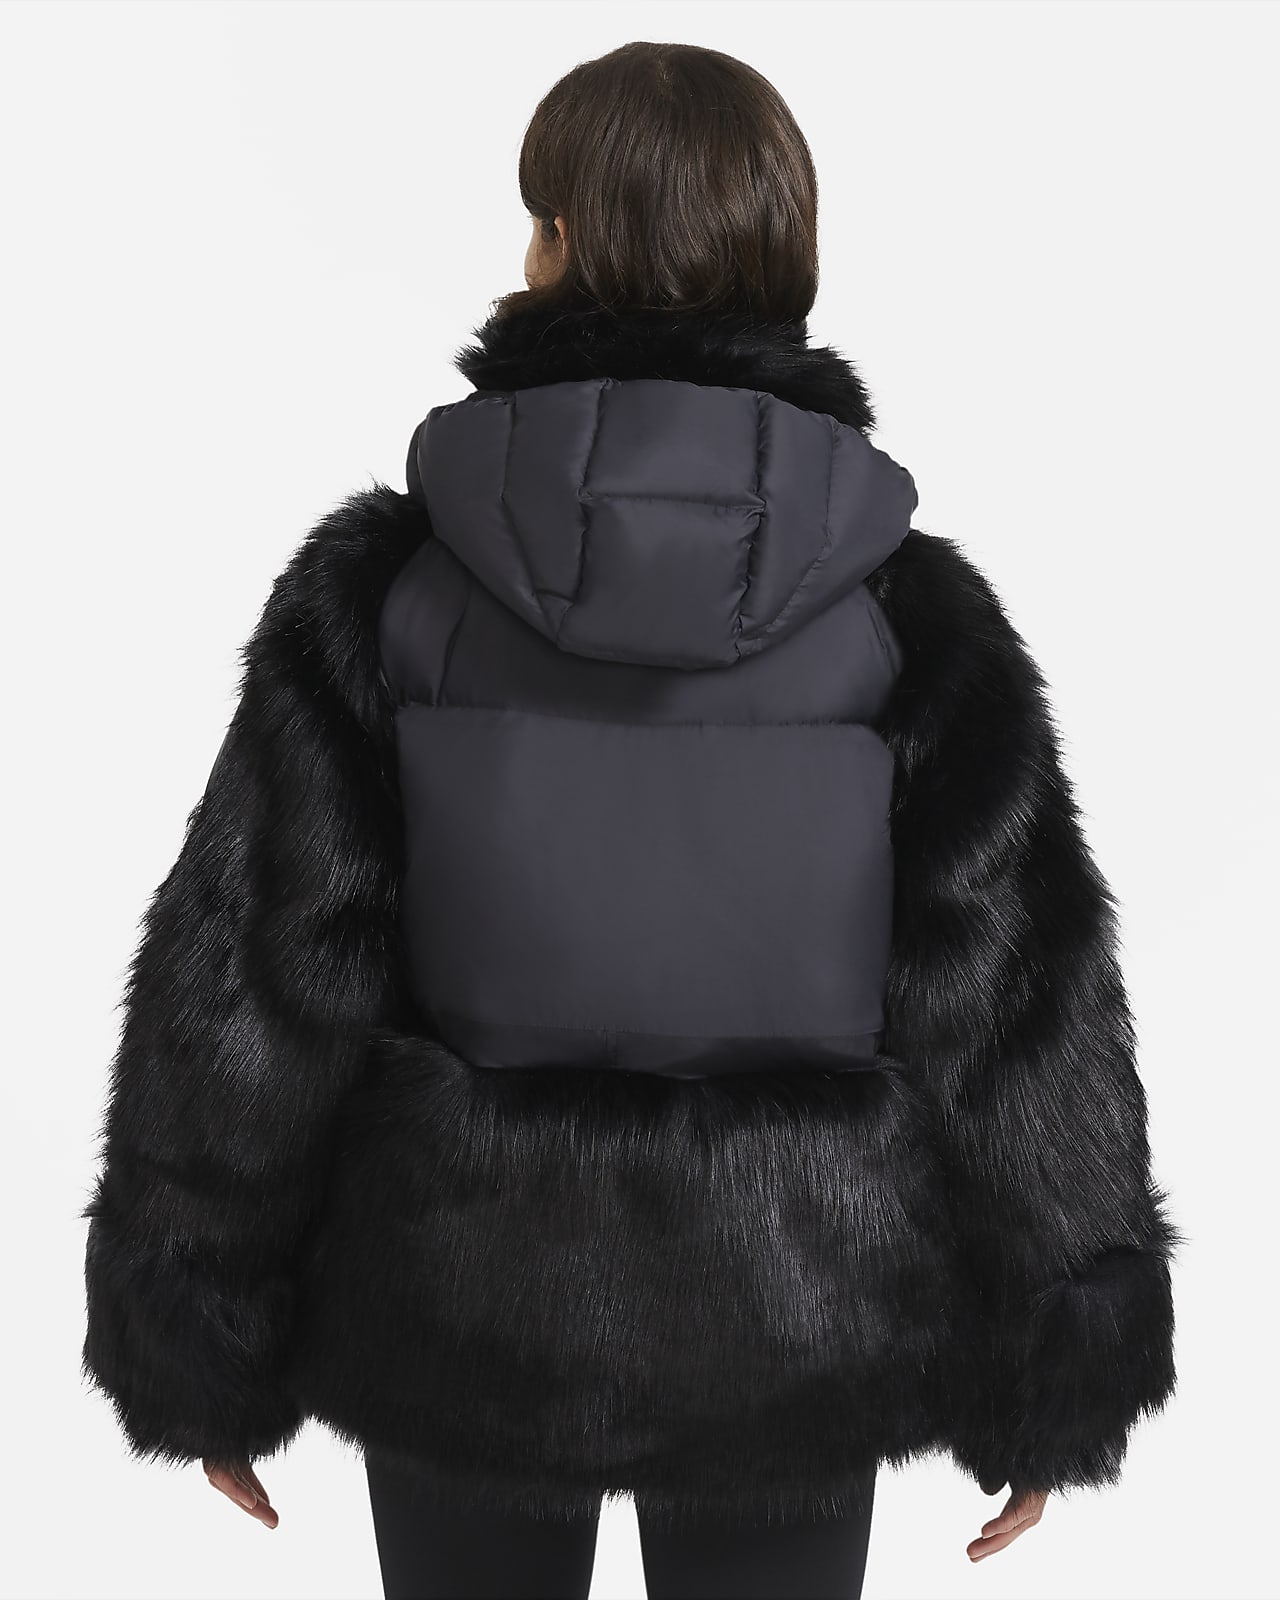 nike jacket with fur